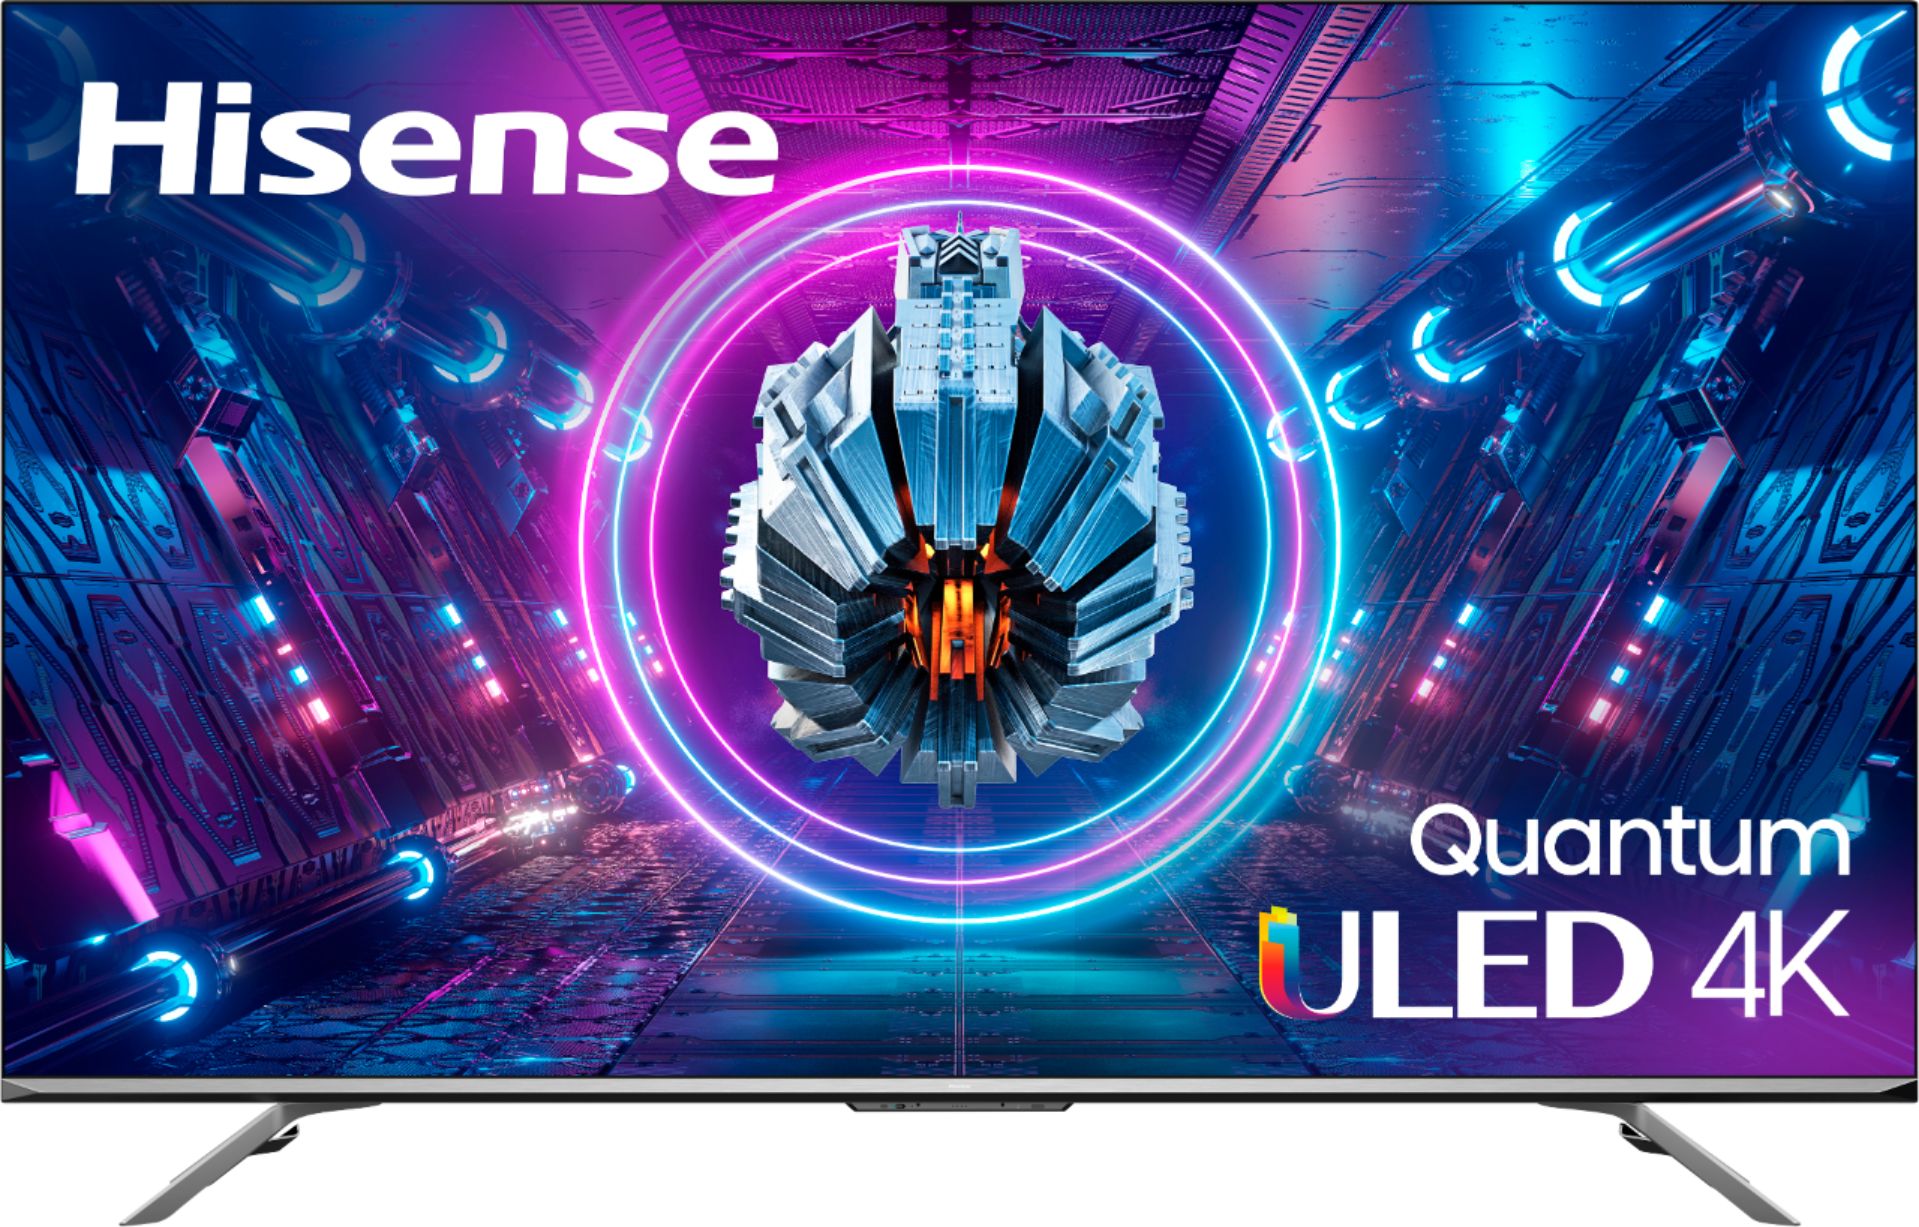 Hisense - 75" Class U7G Series Quantum ULED 4K UHD Smart Android TV